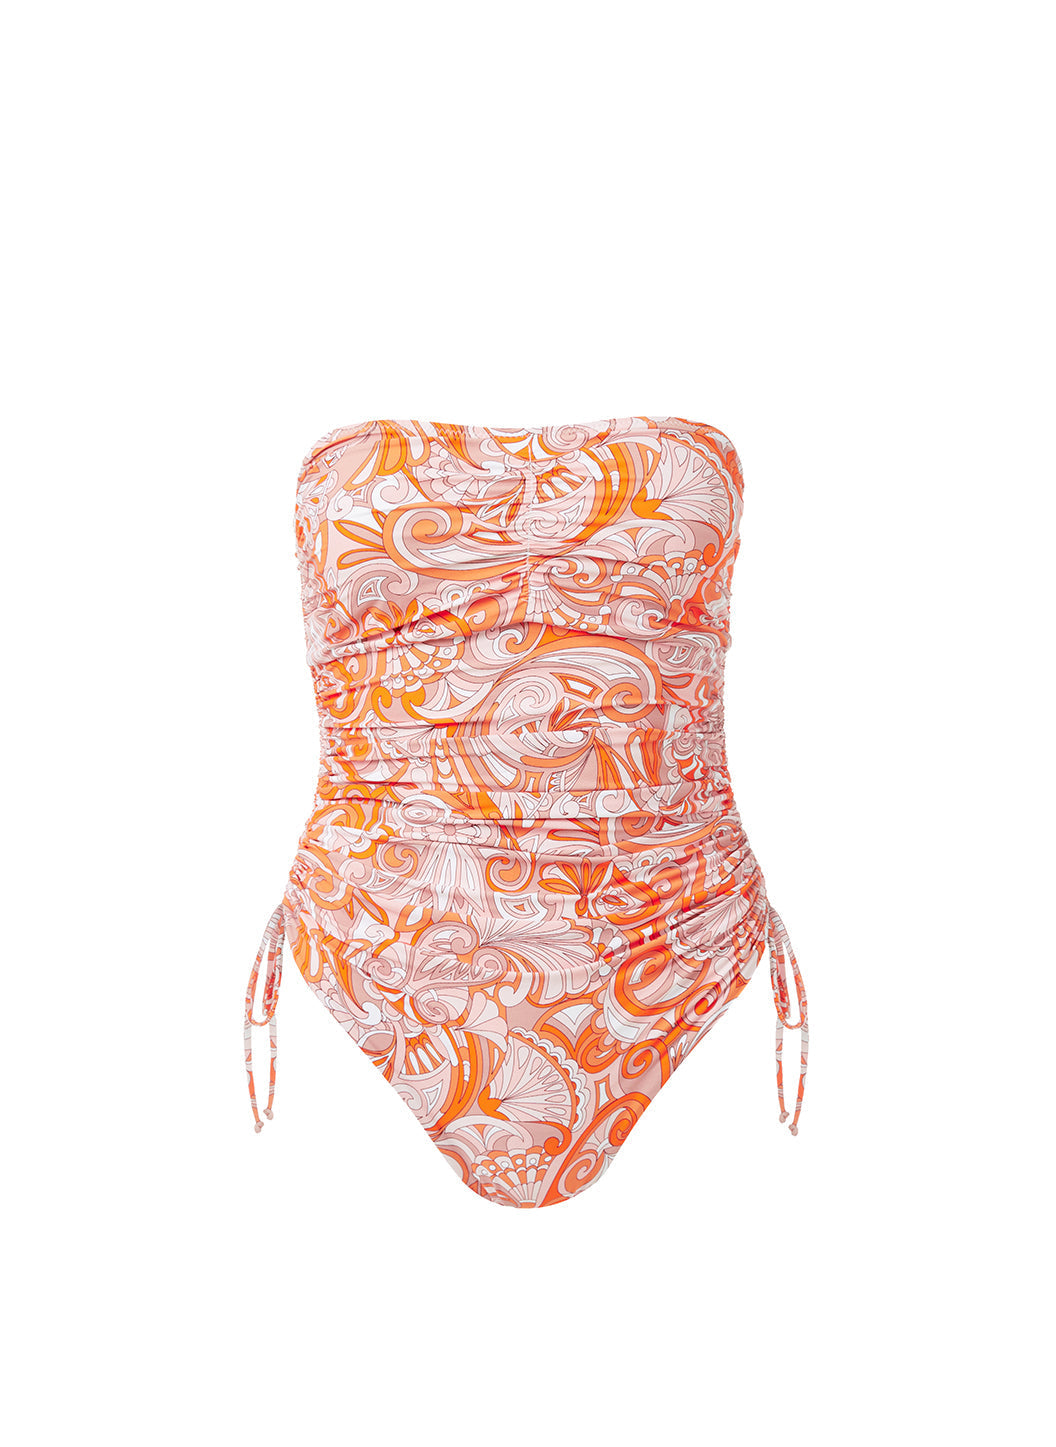 sydney-orange-mirage-swimsuit_cutout